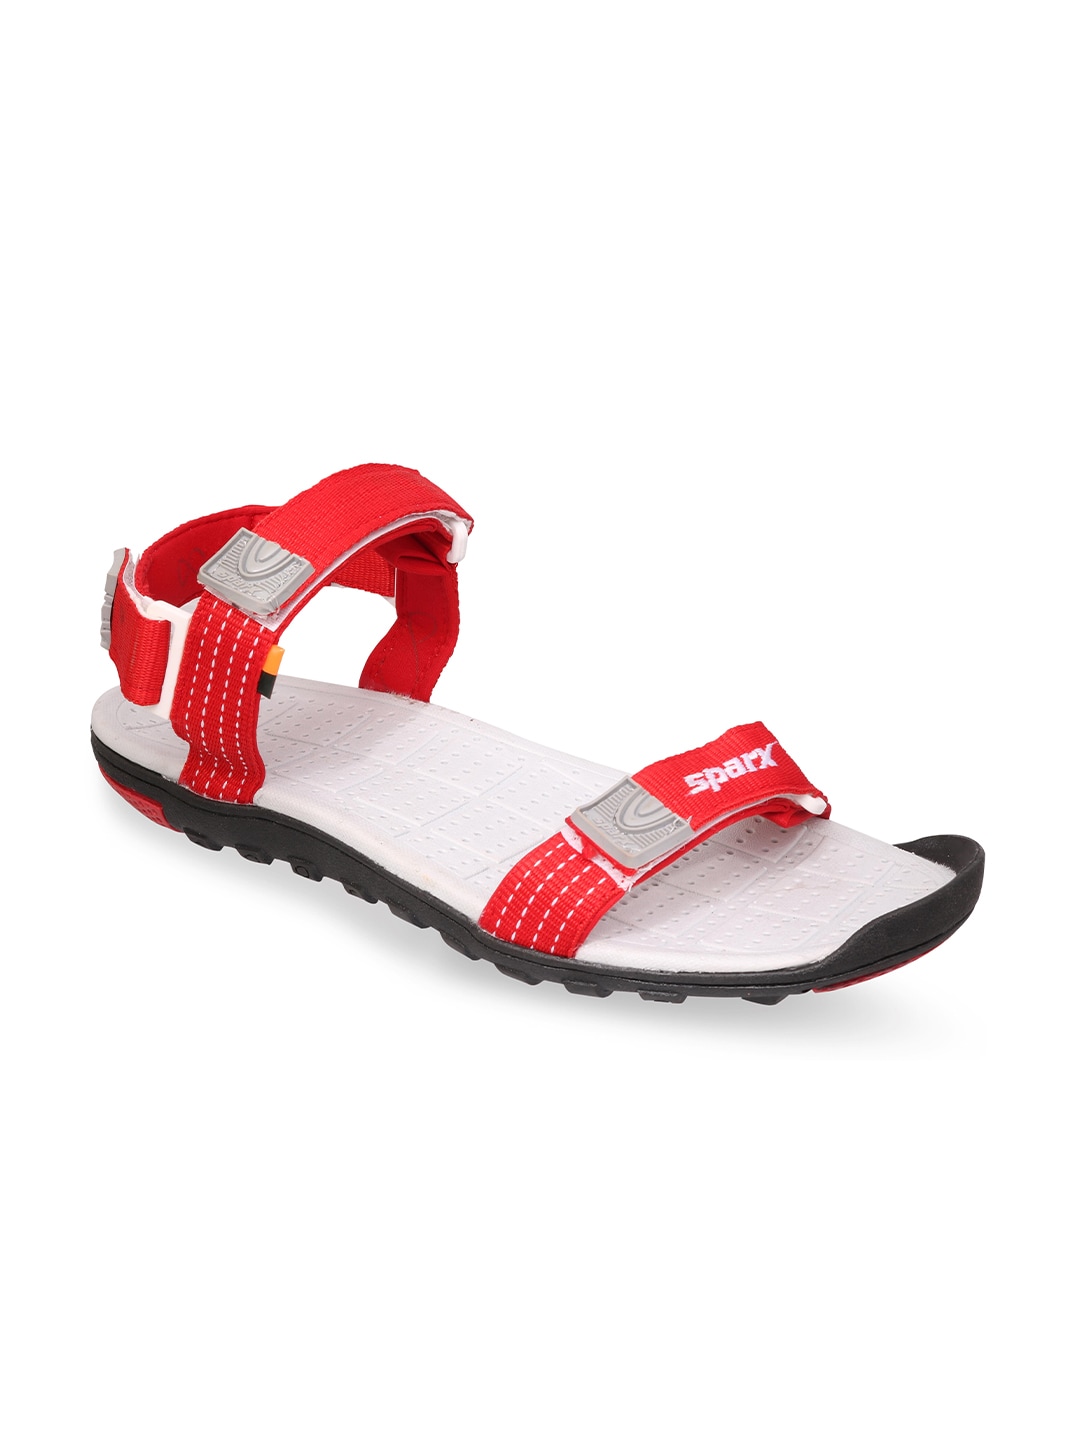 Sparx Men Red & White Sports Sandals